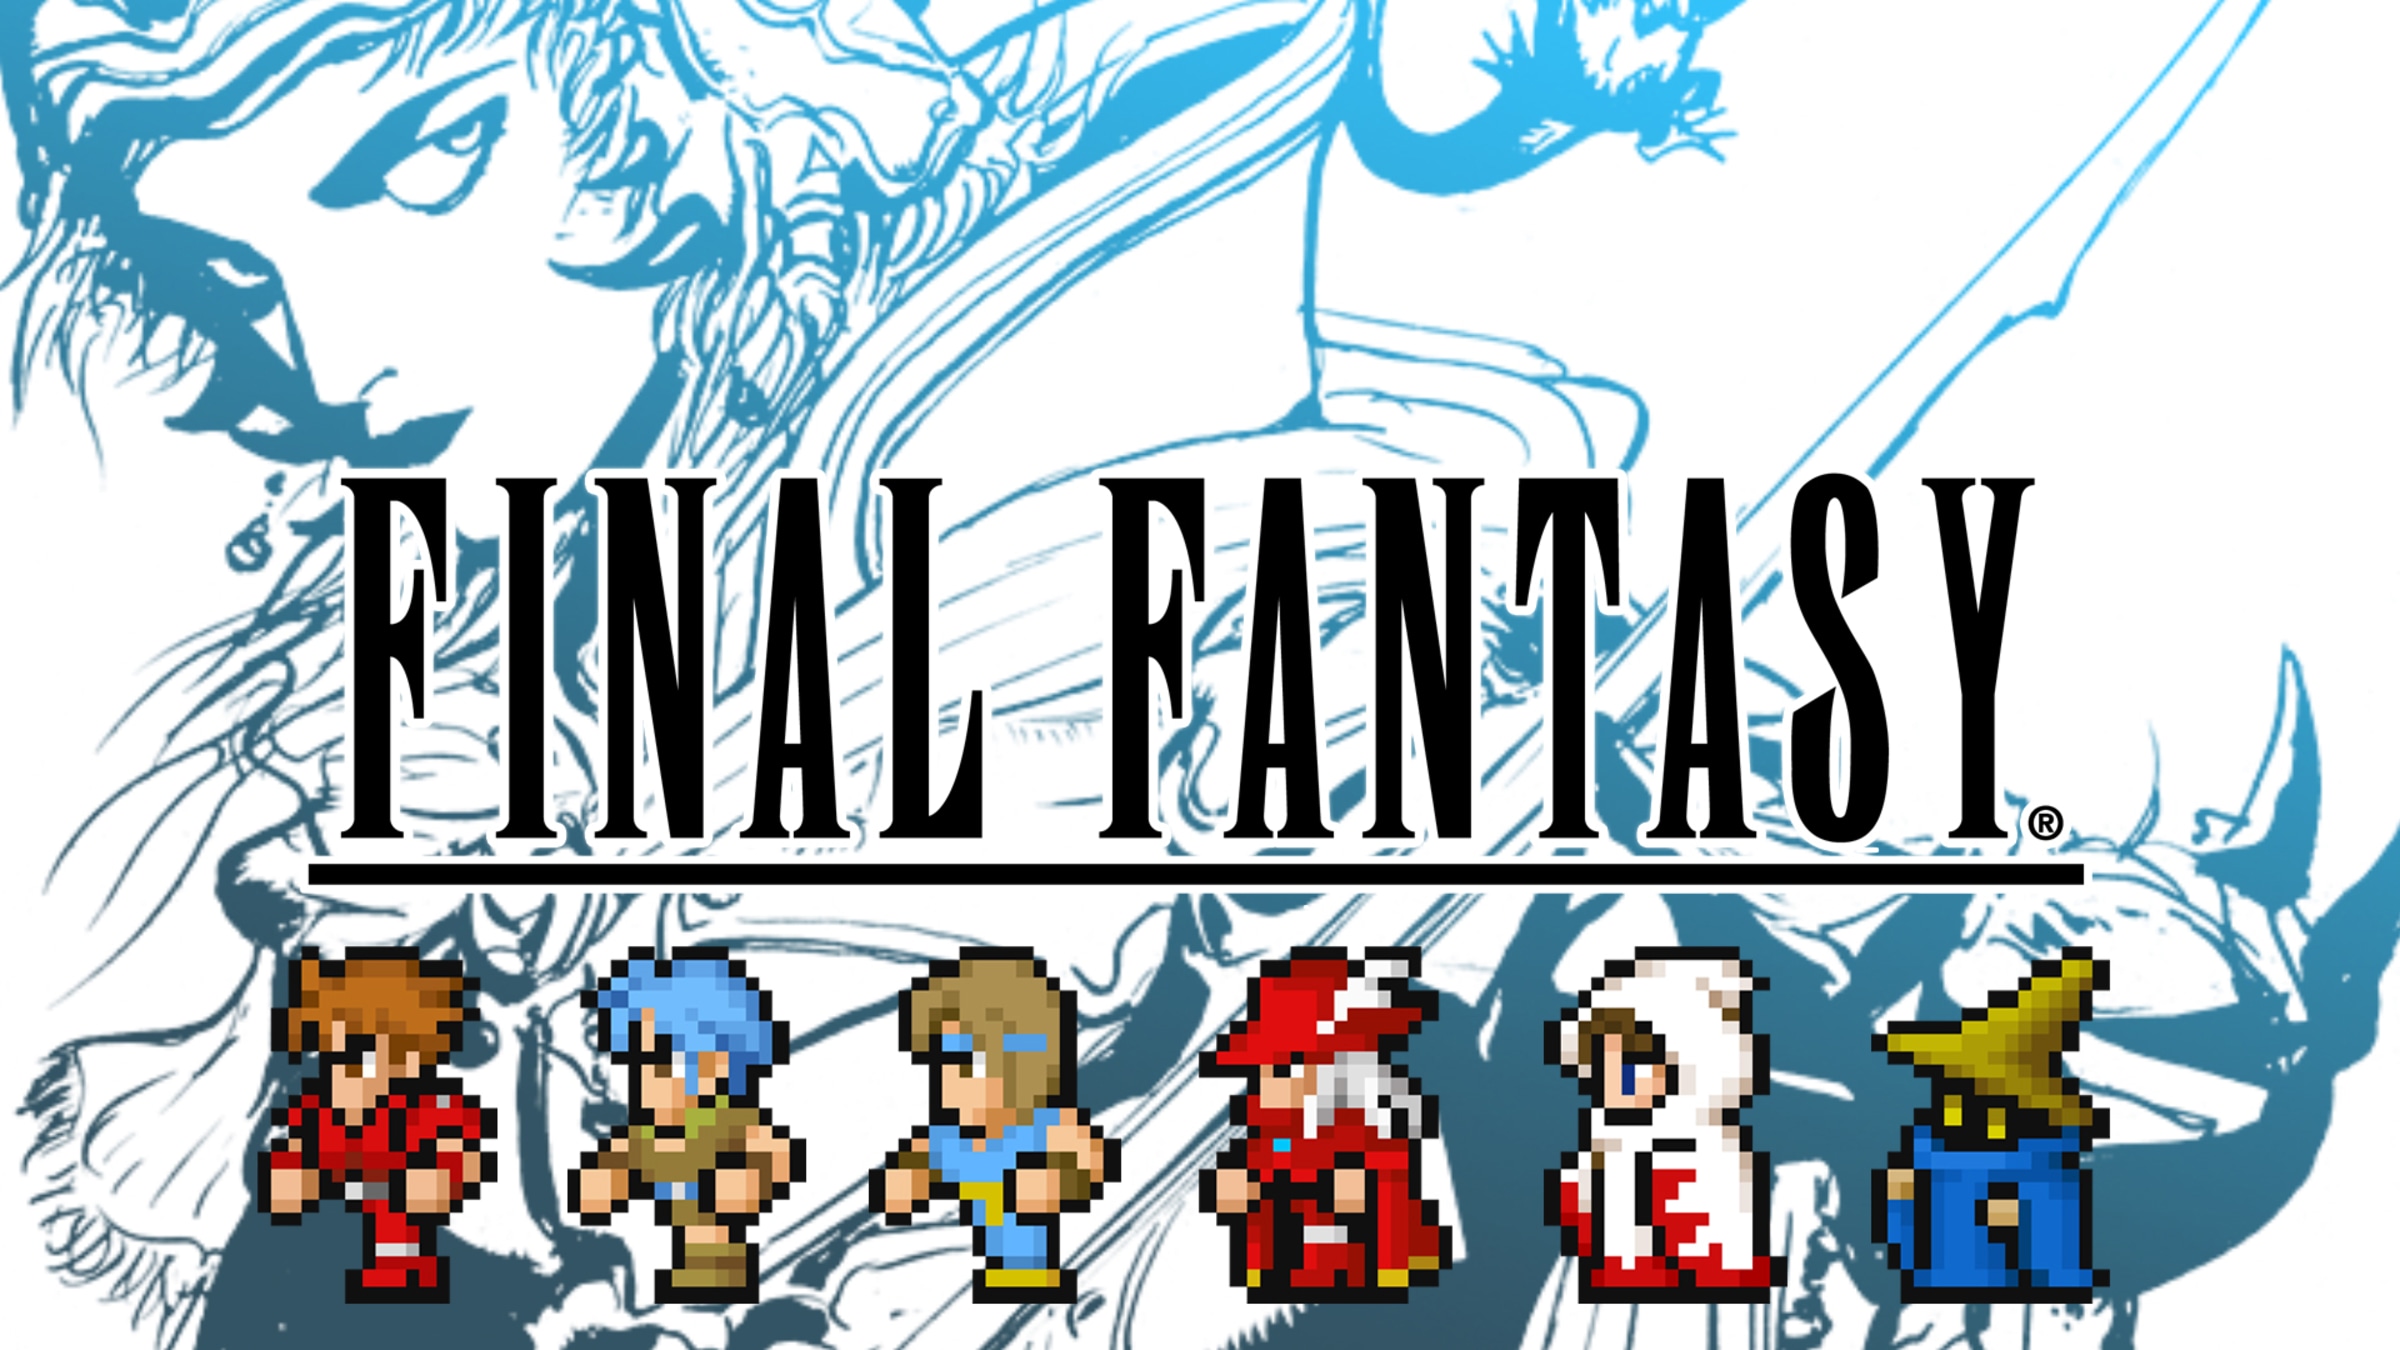 Final Fantasy 1: Magic Items · All usable equipment